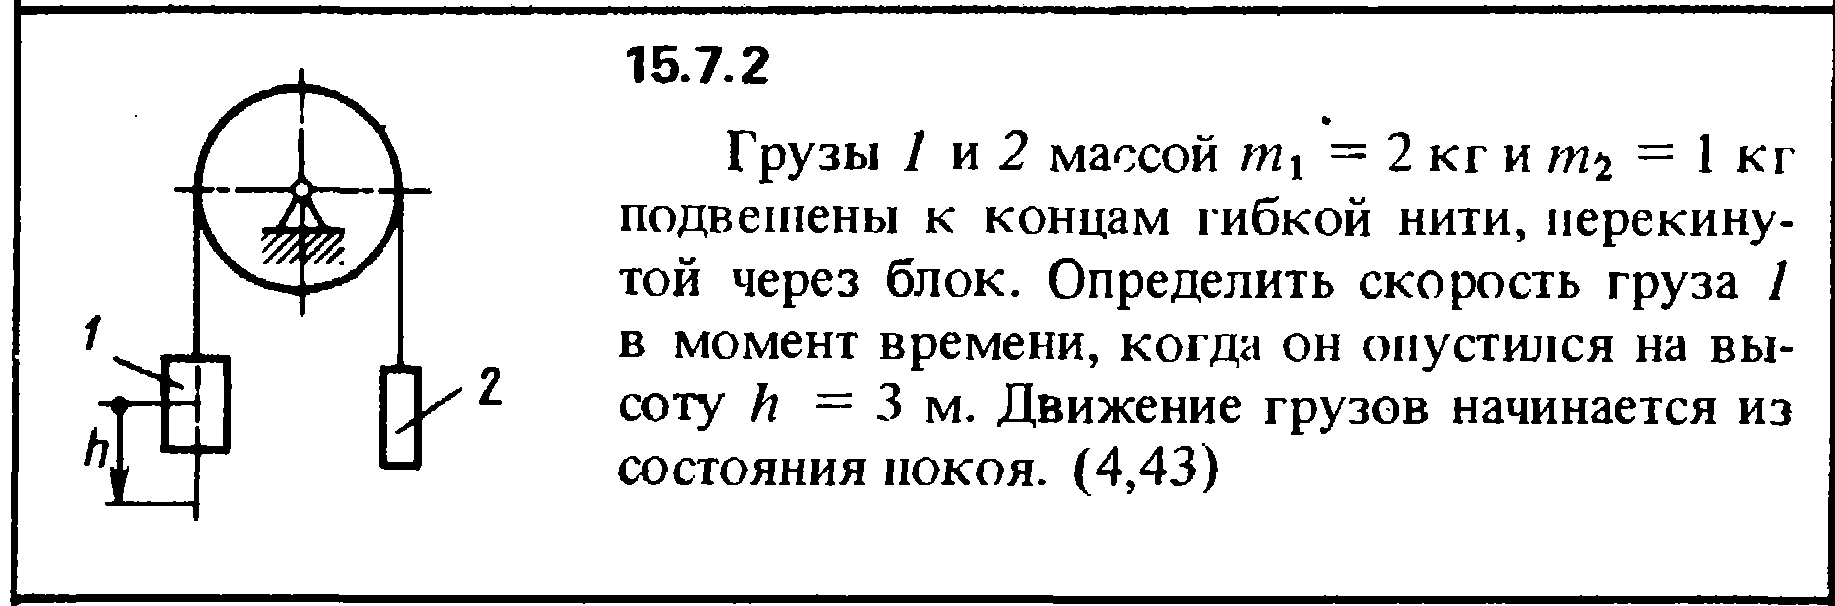 Решение задачи 15.7.2 из сборника Кепе О.Е. 1989 года